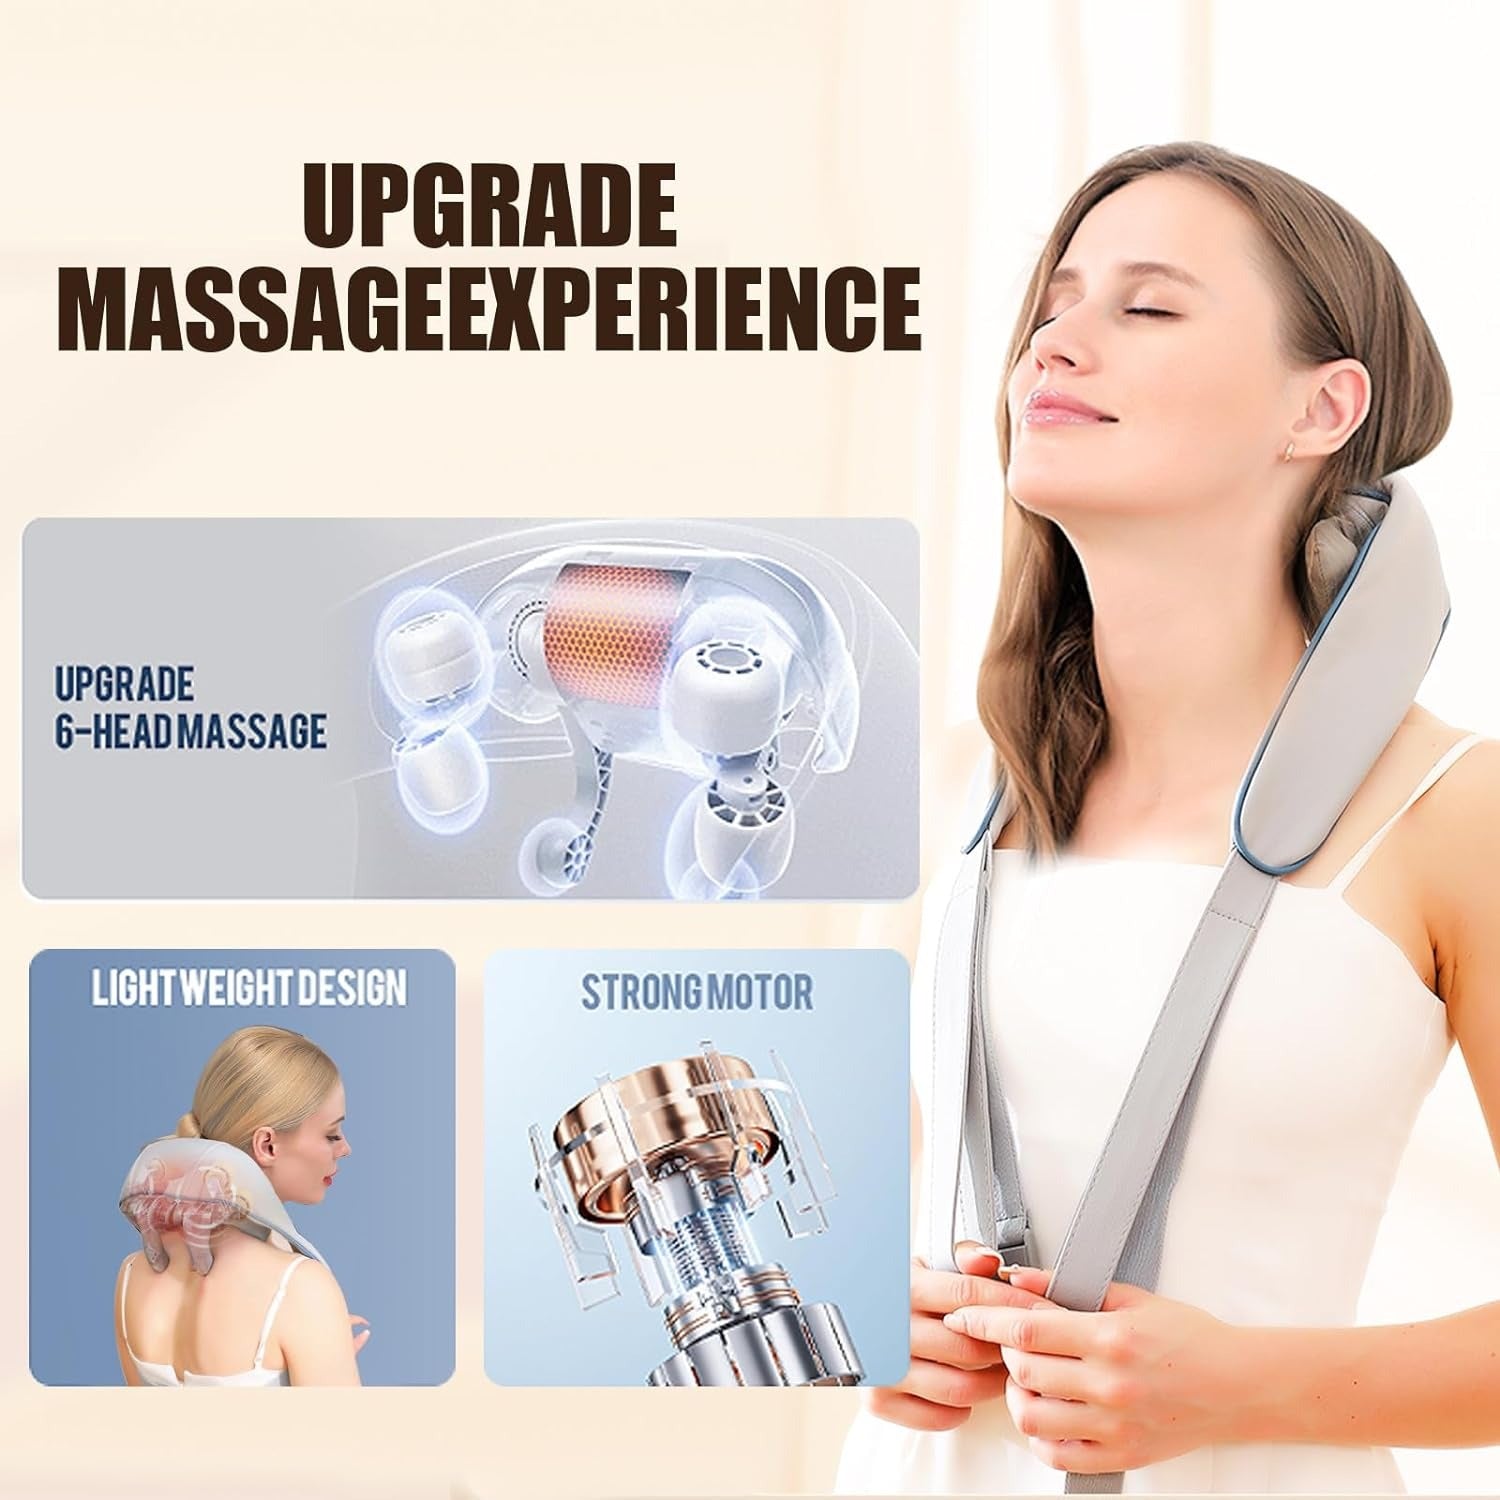 upgrade massage experience- light weigh design